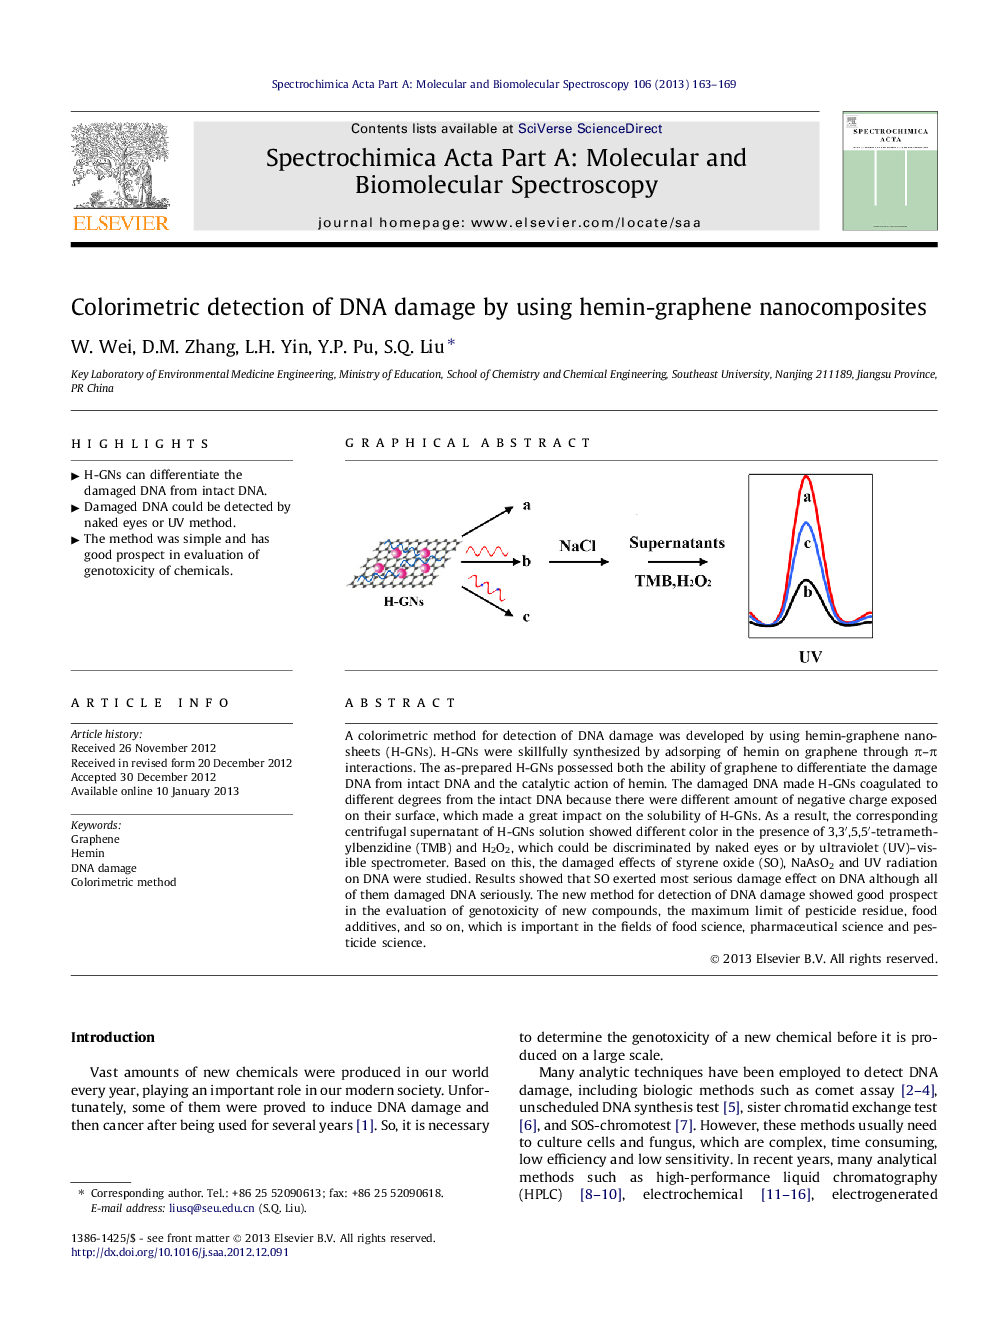 Colorimetric detection of DNA damage by using hemin-graphene nanocomposites